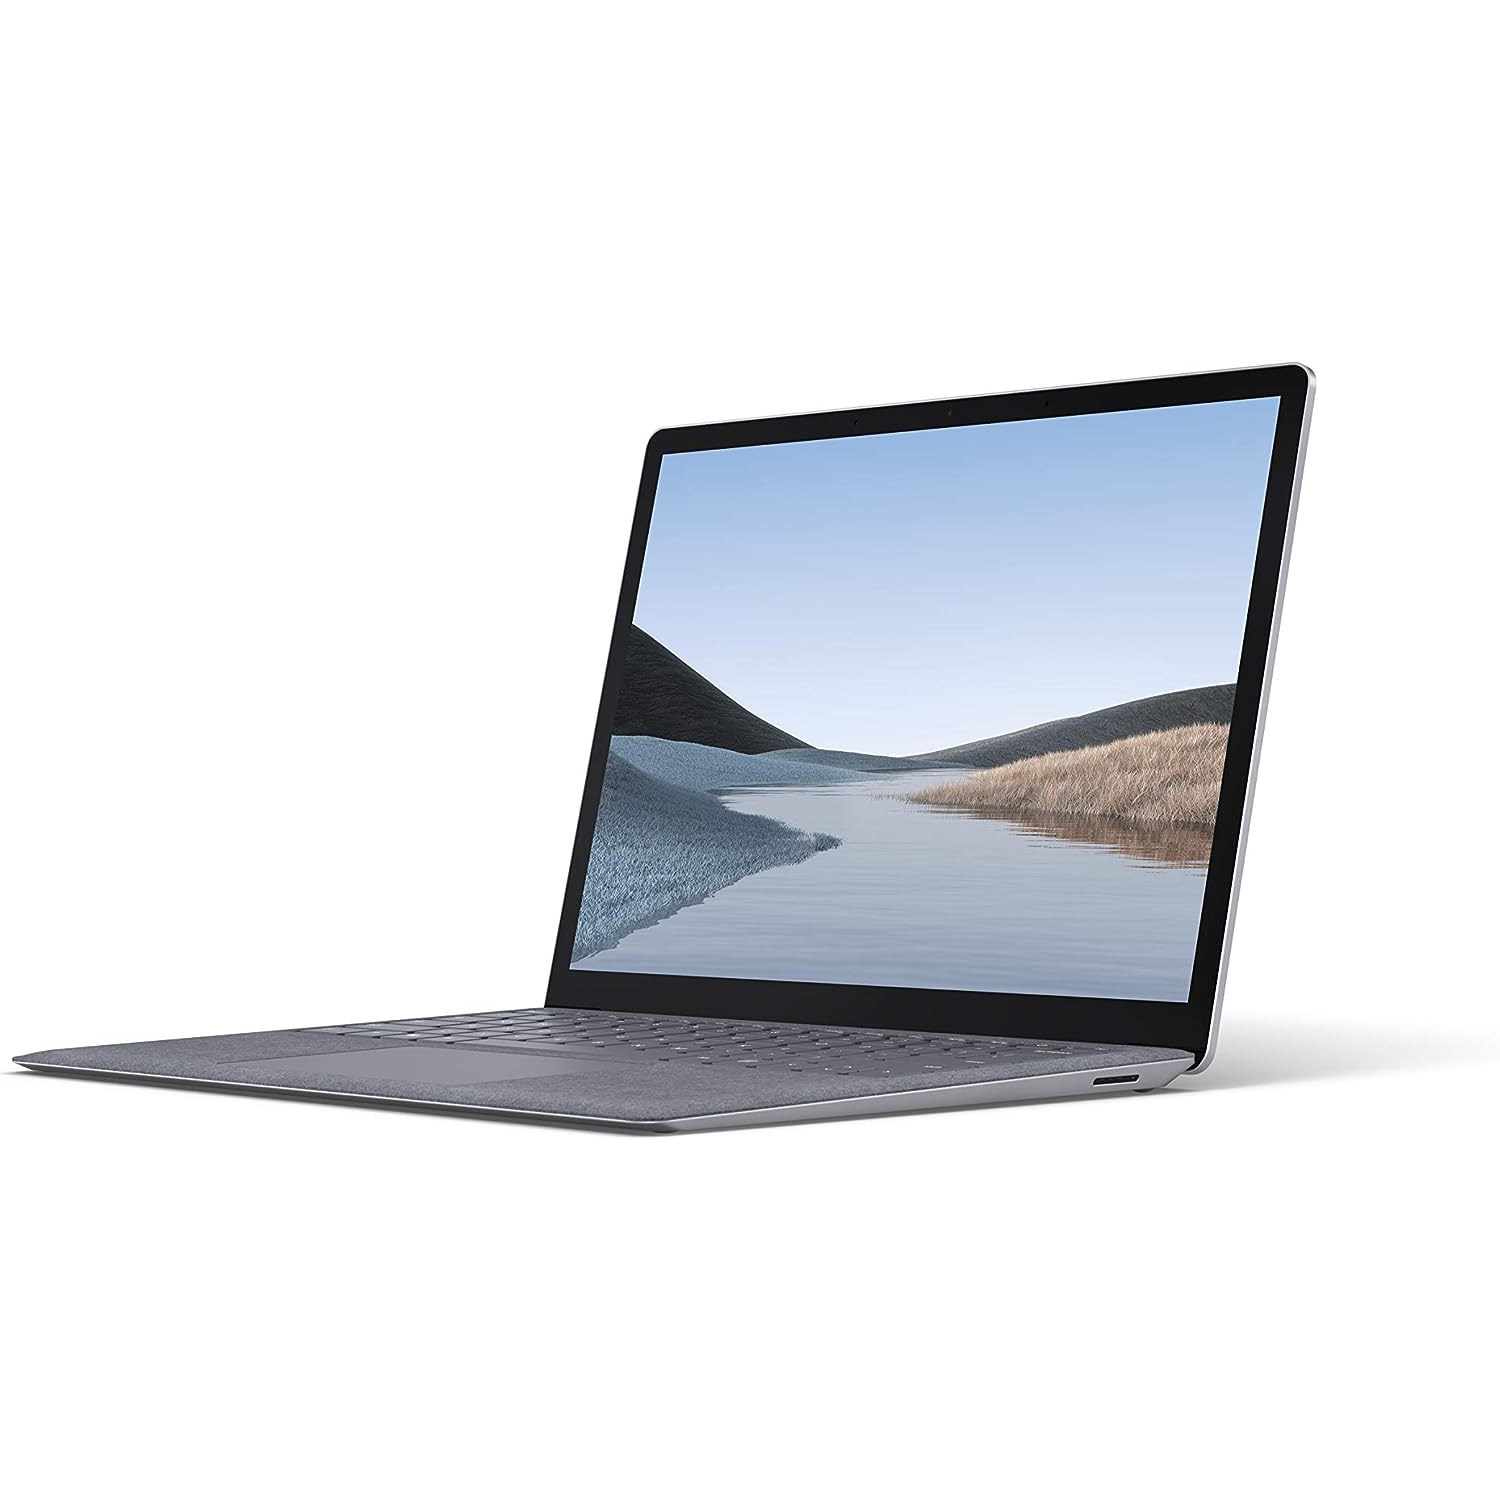 Refurbished (Good) - Microsoft Surface Laptop 3 QXX-00001 13.5" Touchscreen Notebook Intel i7-1065G7 16 GB LPDDR4 256 GB SSD Windows 10 Pro 64-Bit